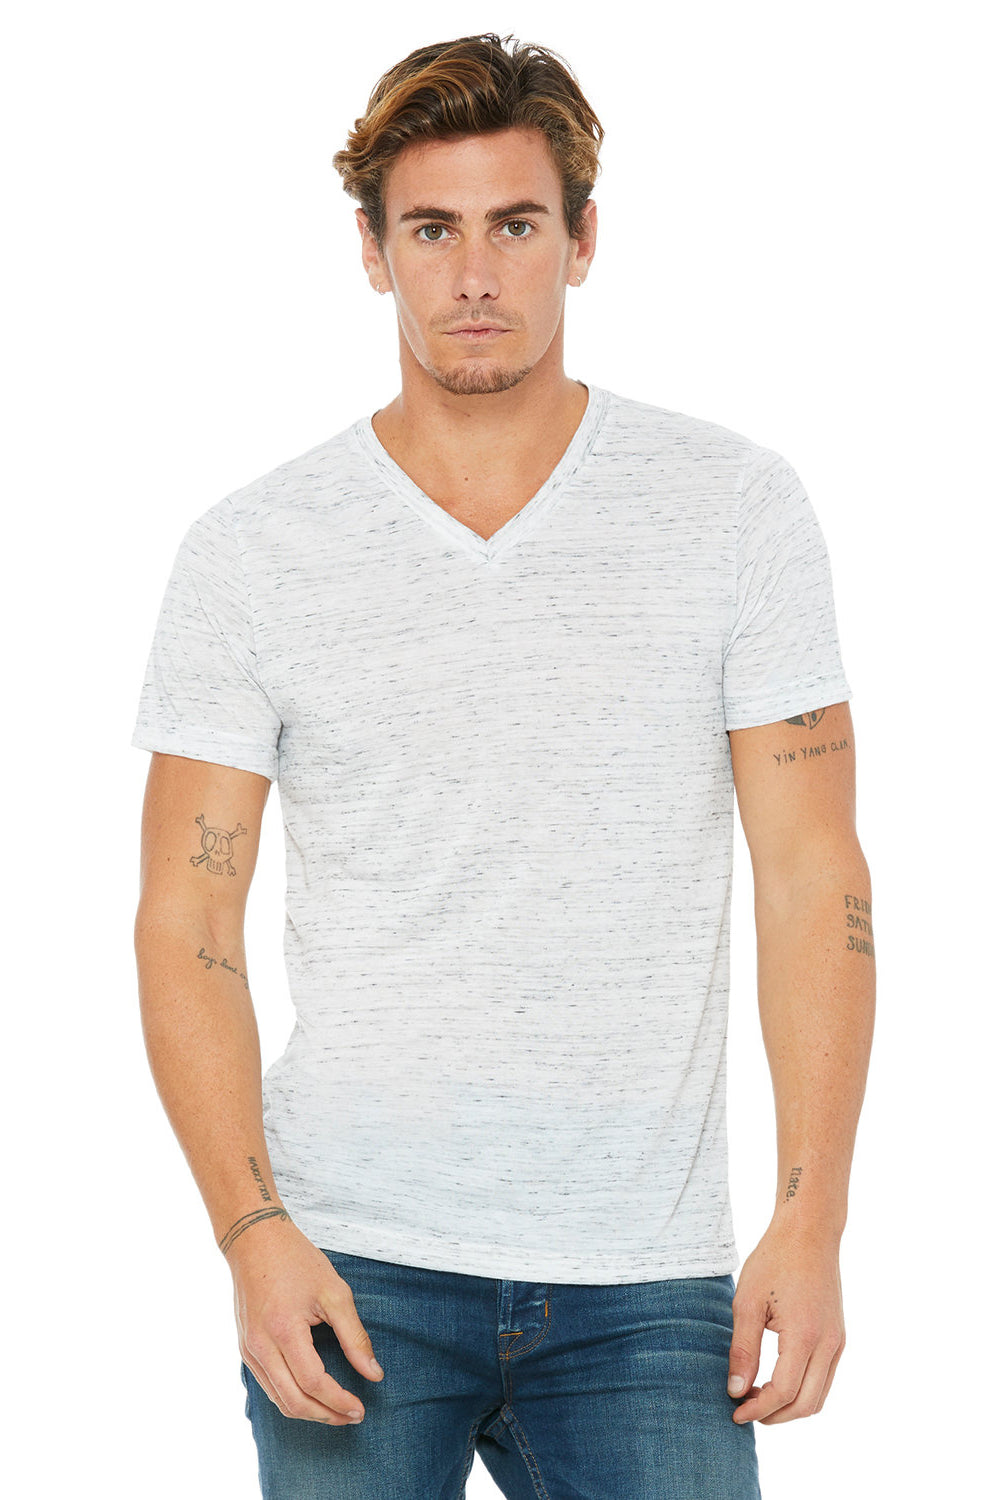 Bella + Canvas BC3005/3005/3655C Mens Jersey Short Sleeve V-Neck T-Shirt White Marble Model Front